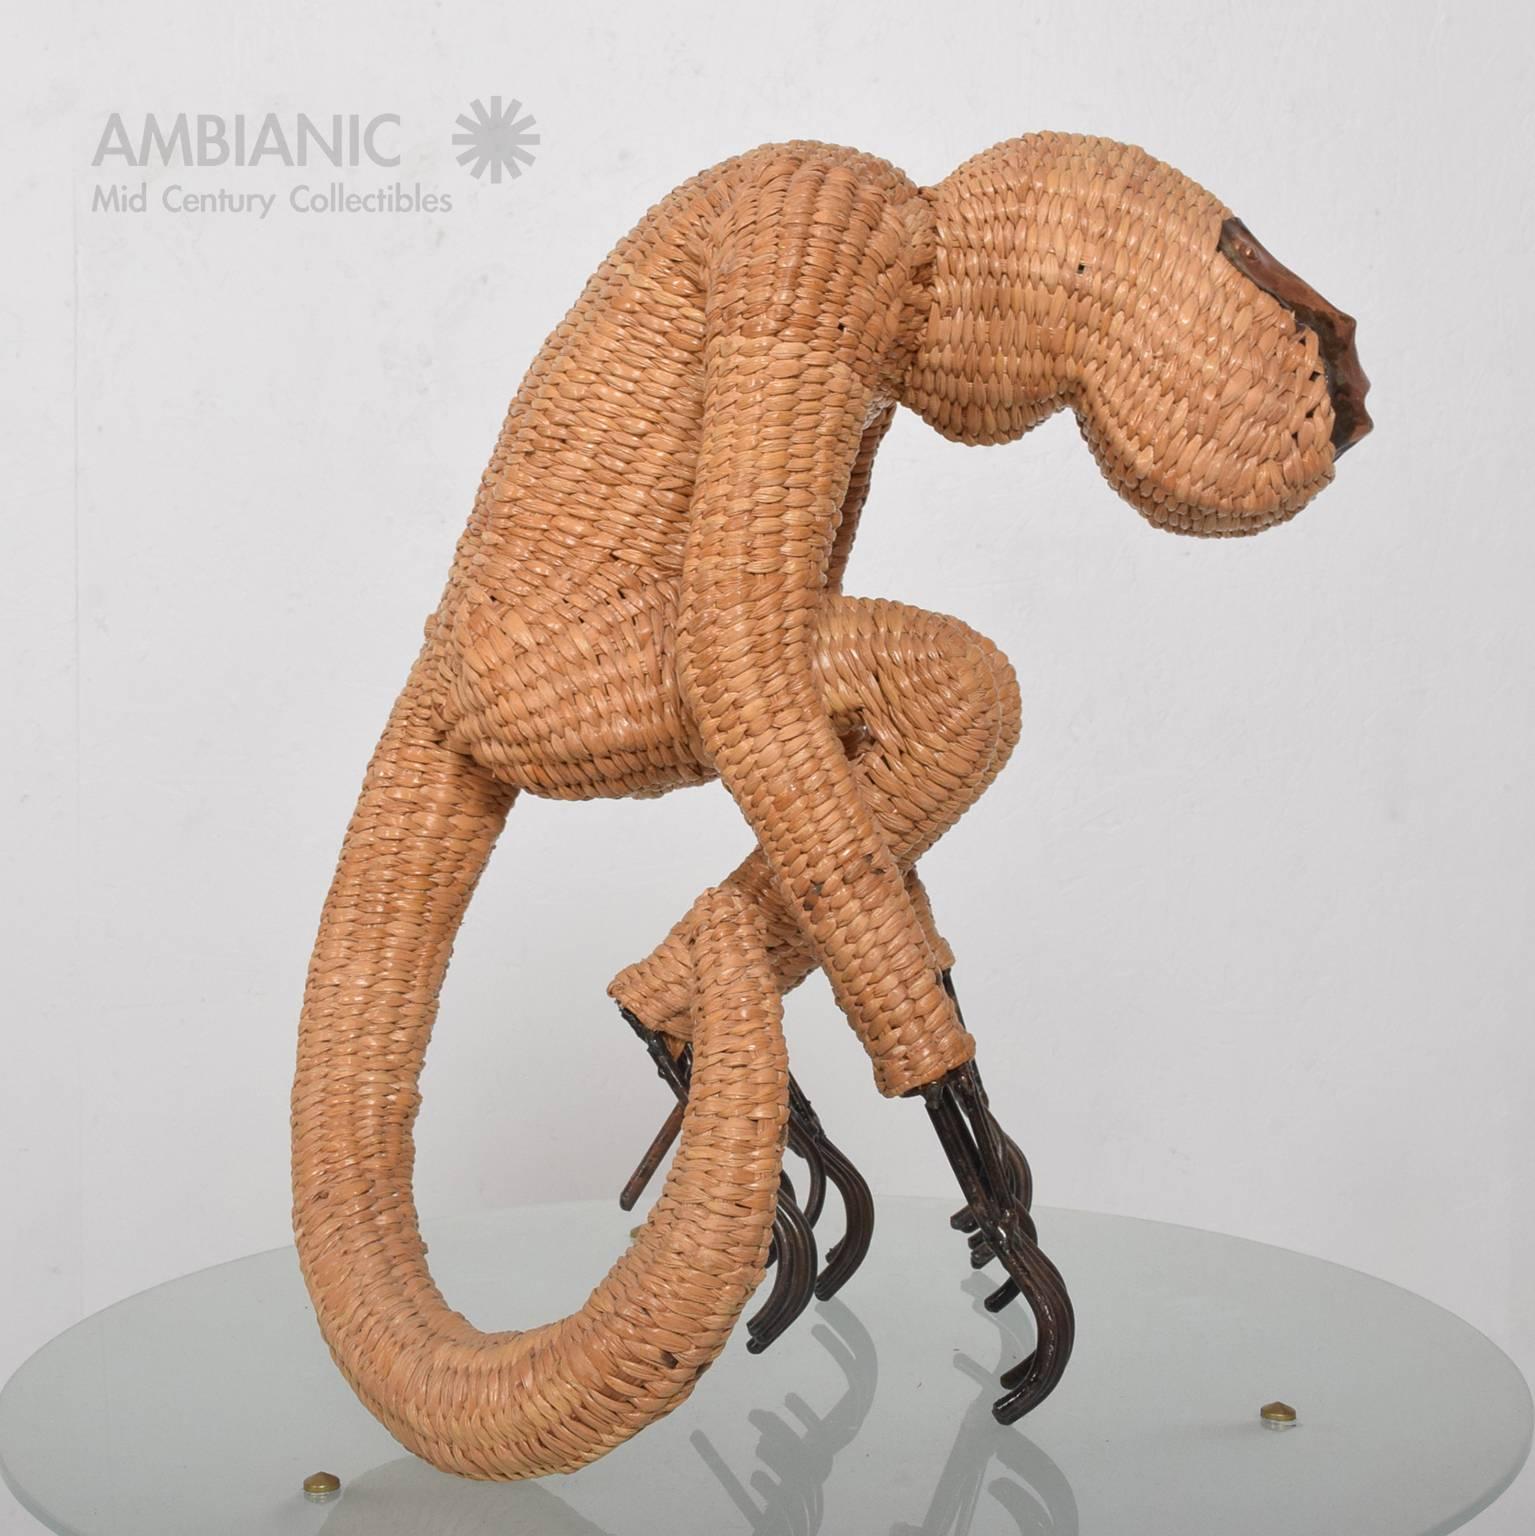 Copper Mario Lopez Torres Wicker Monkey Sculpture